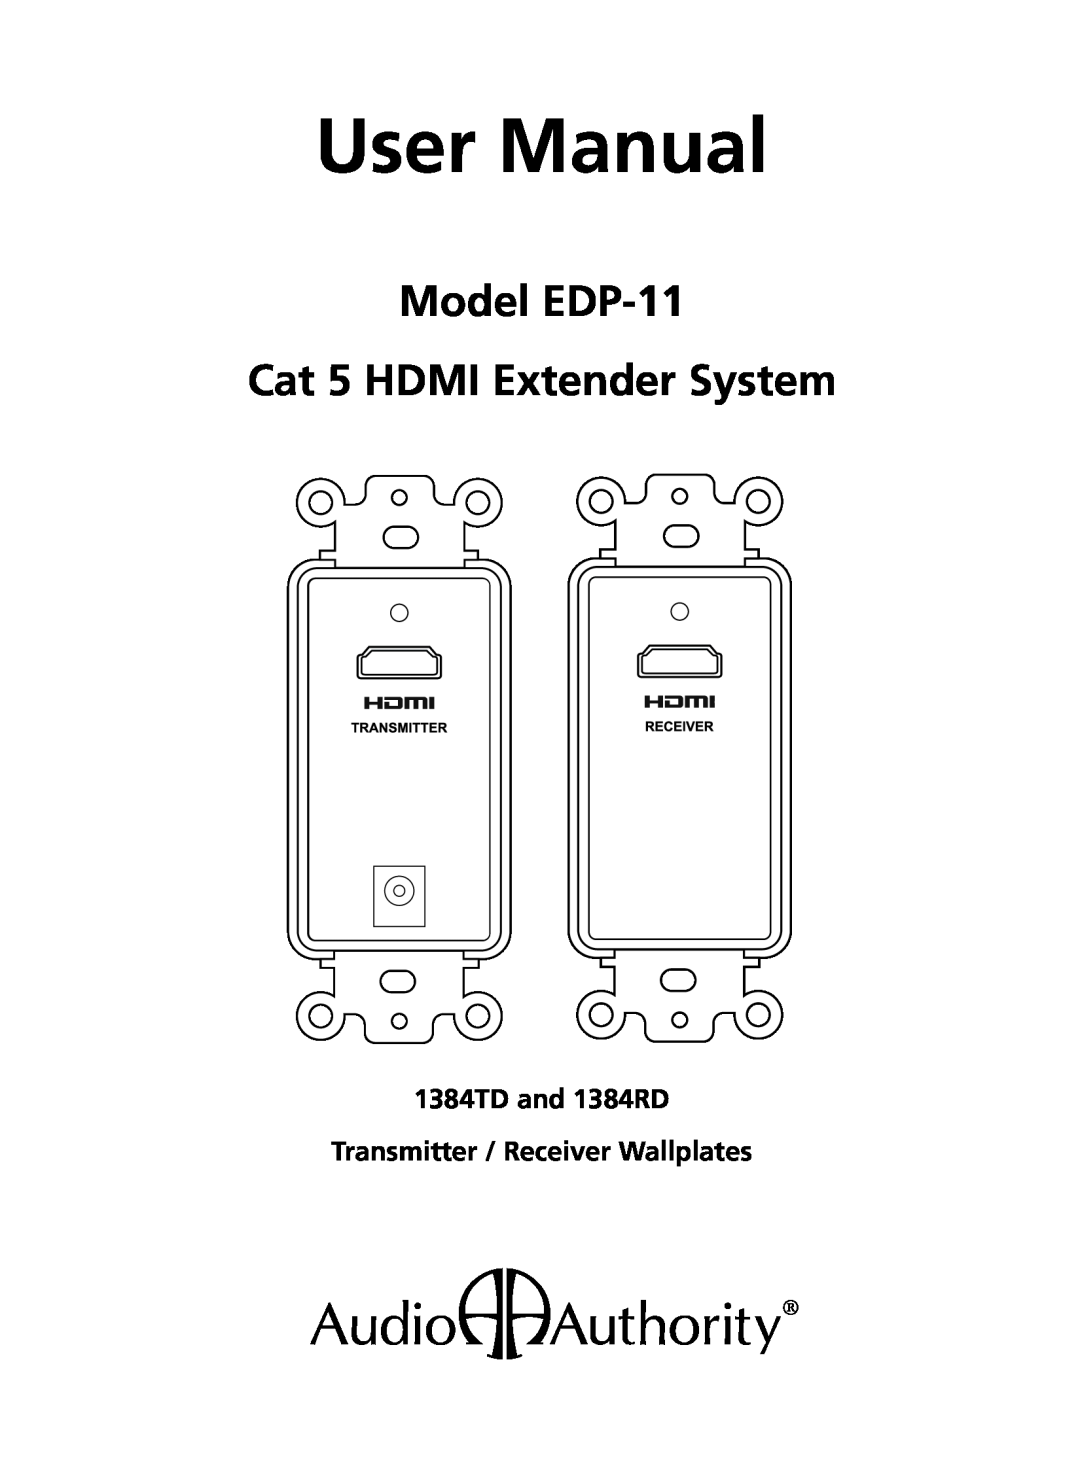 Audio Authority user manual Model EDP-11 Cat 5 HDMI Extender System, User Manual 